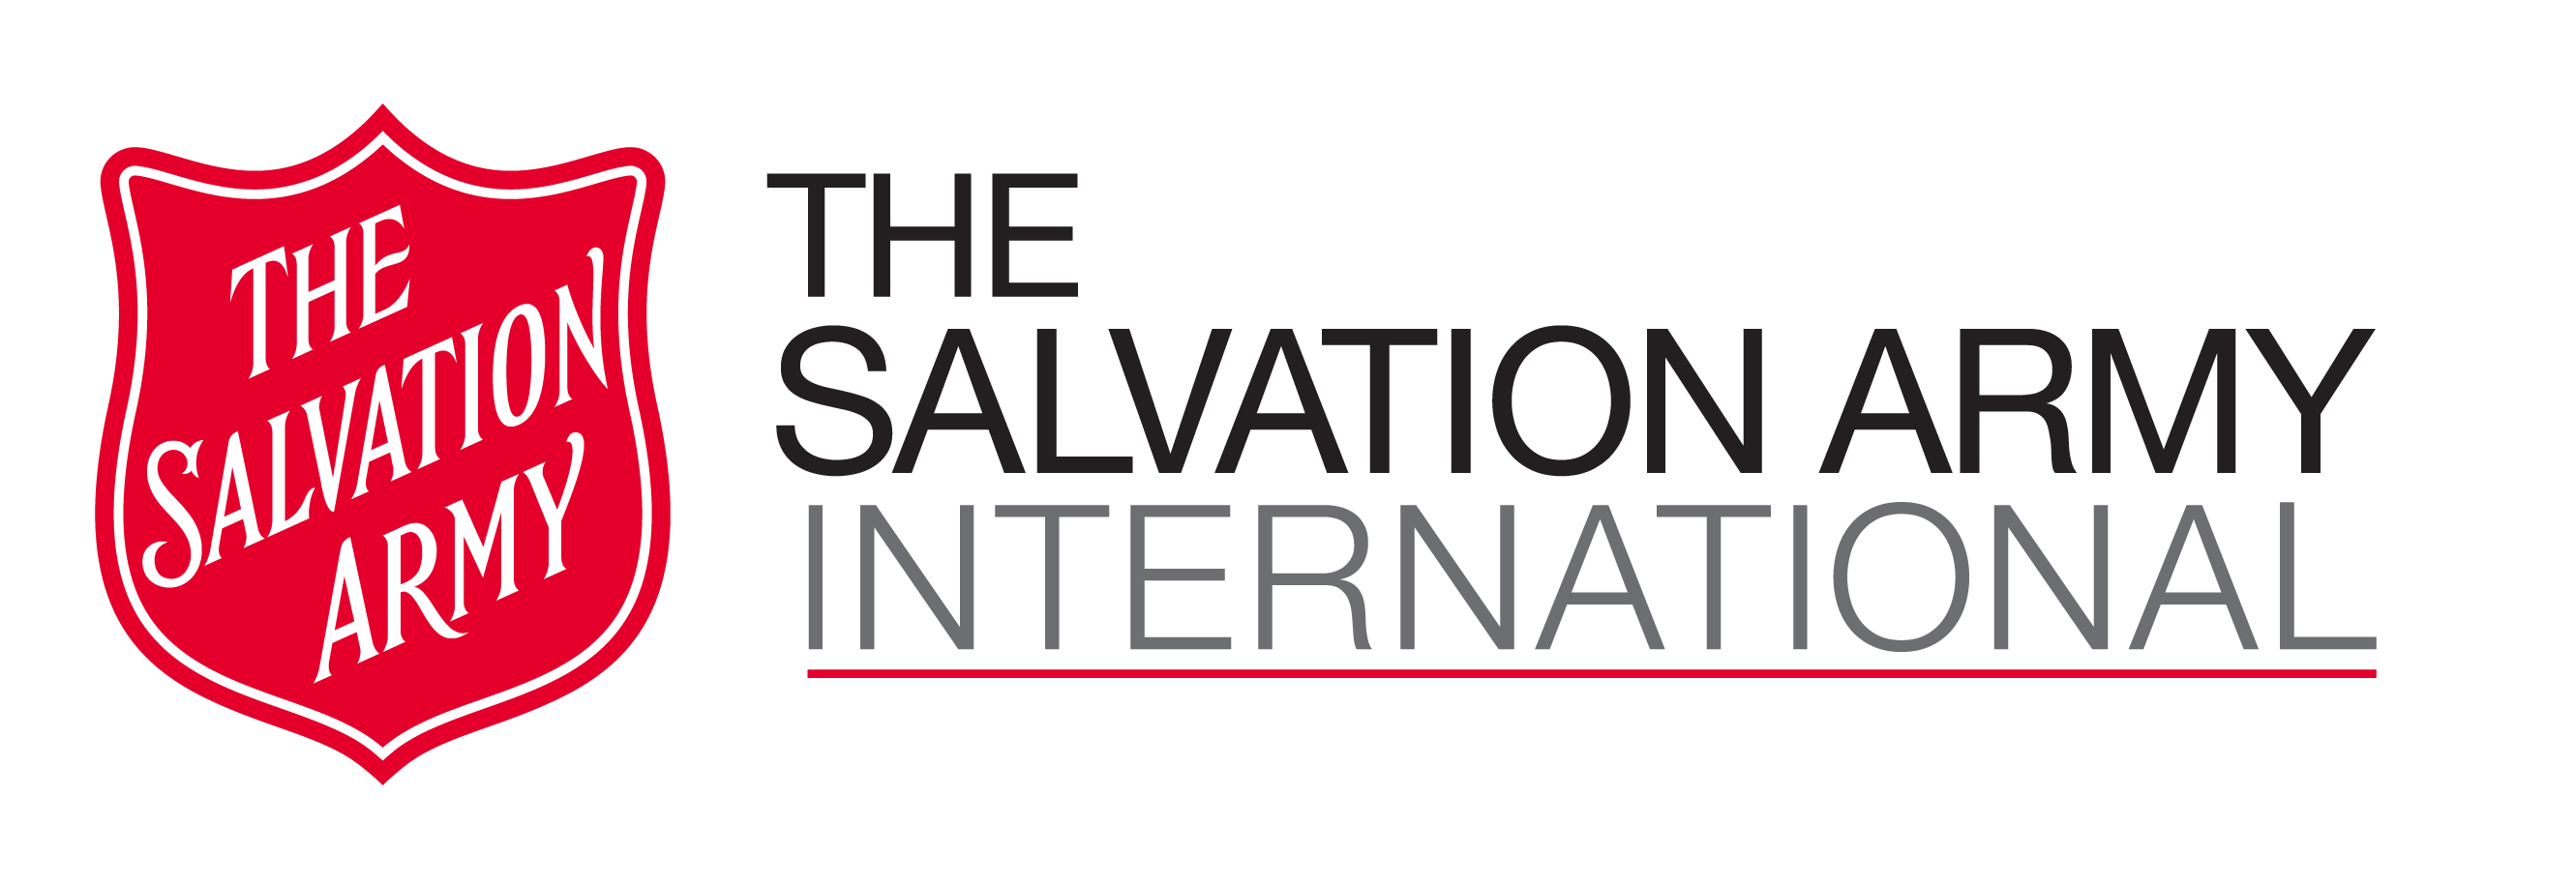 The Salvation Army International Headquarters